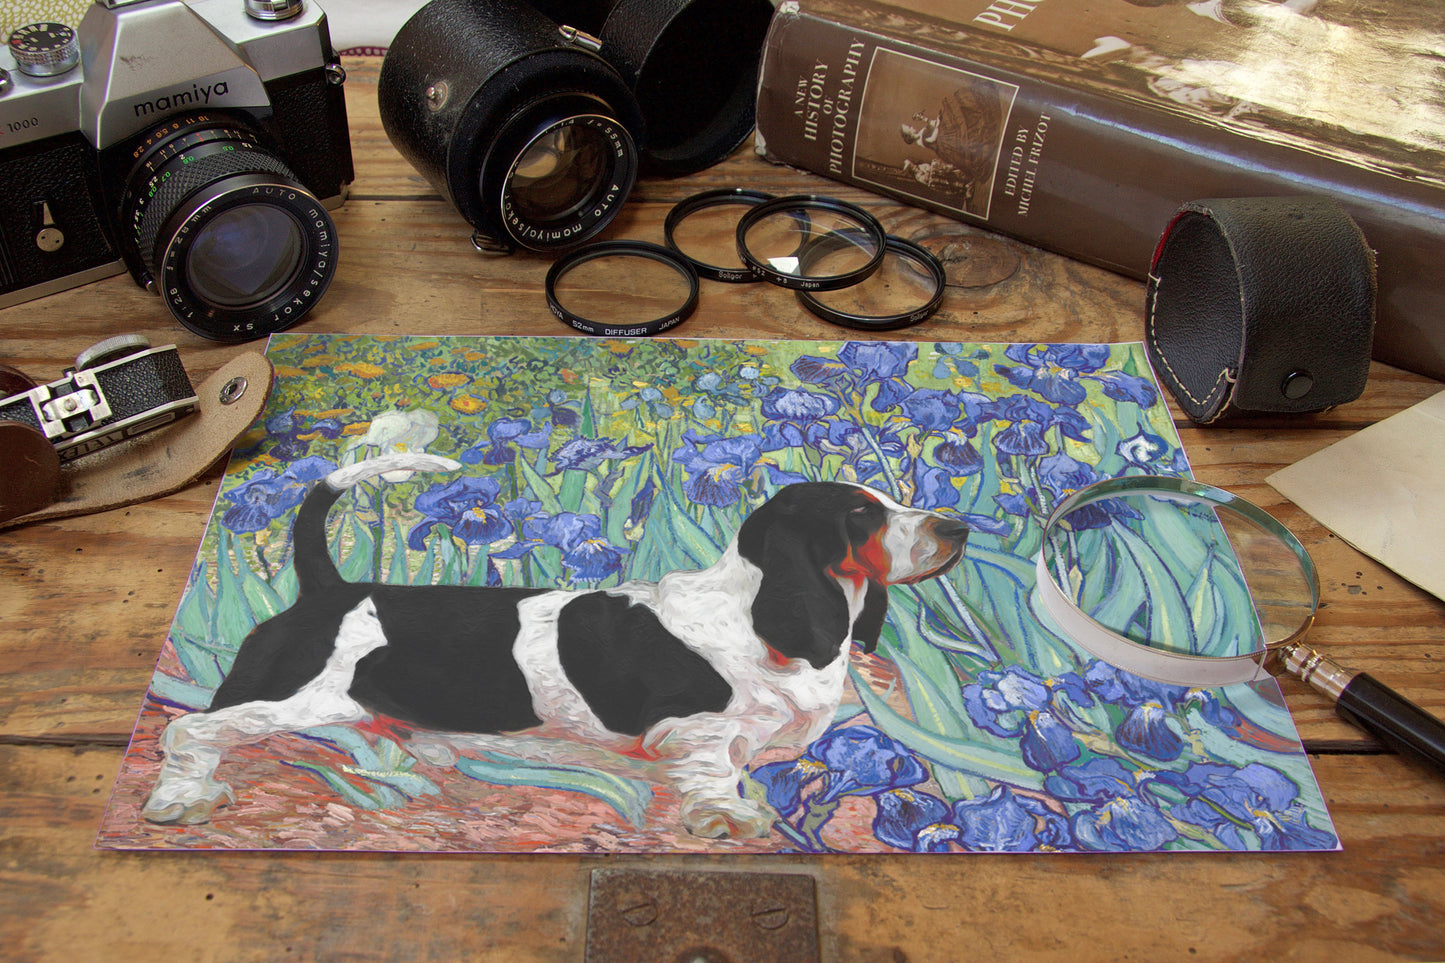 Basset Hound Irises Van Gogh Art by Nobility Dogs